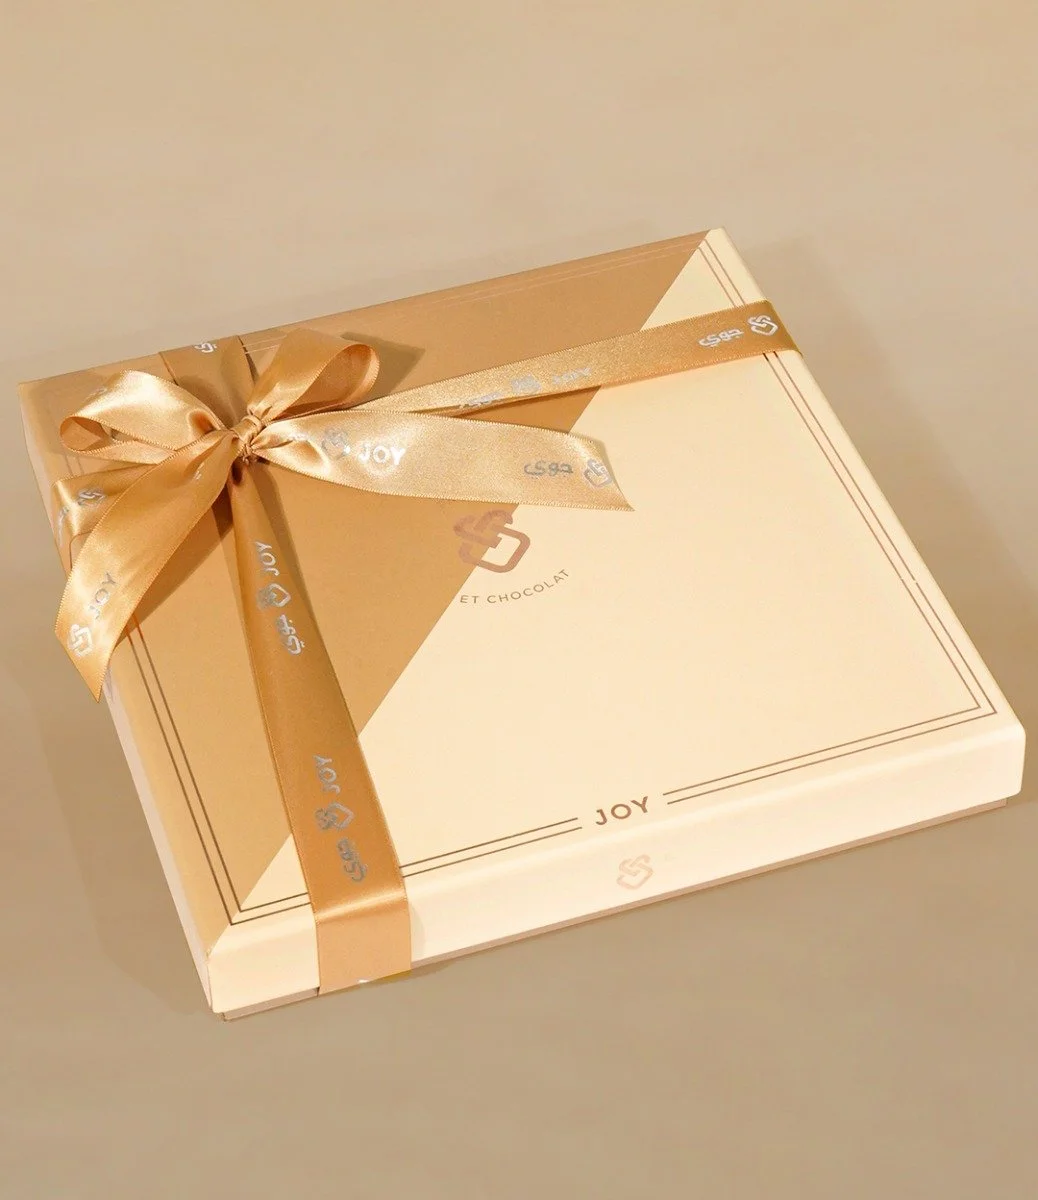 Super Delux Chocolate In Cream Beige Box By Joy Chocolate